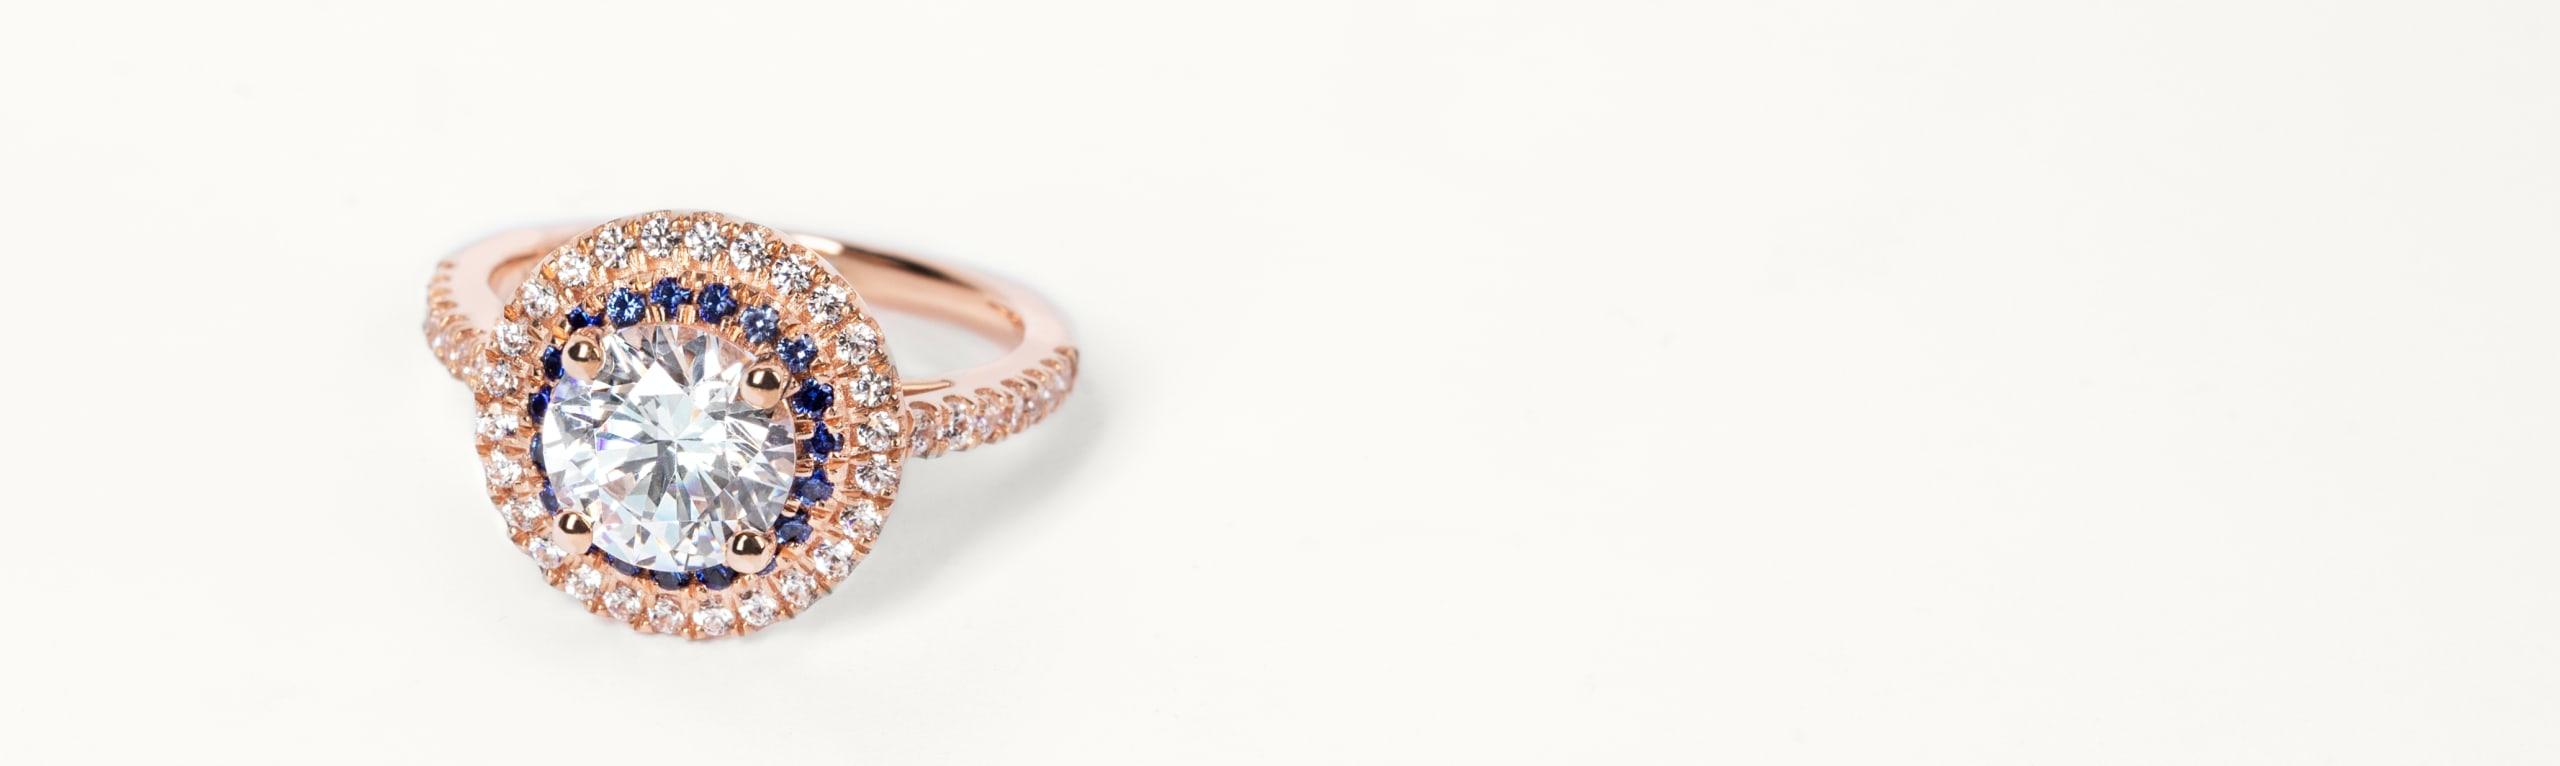 Top 40 Big Diamond Engagement Rings - Estate Diamond Jewelry